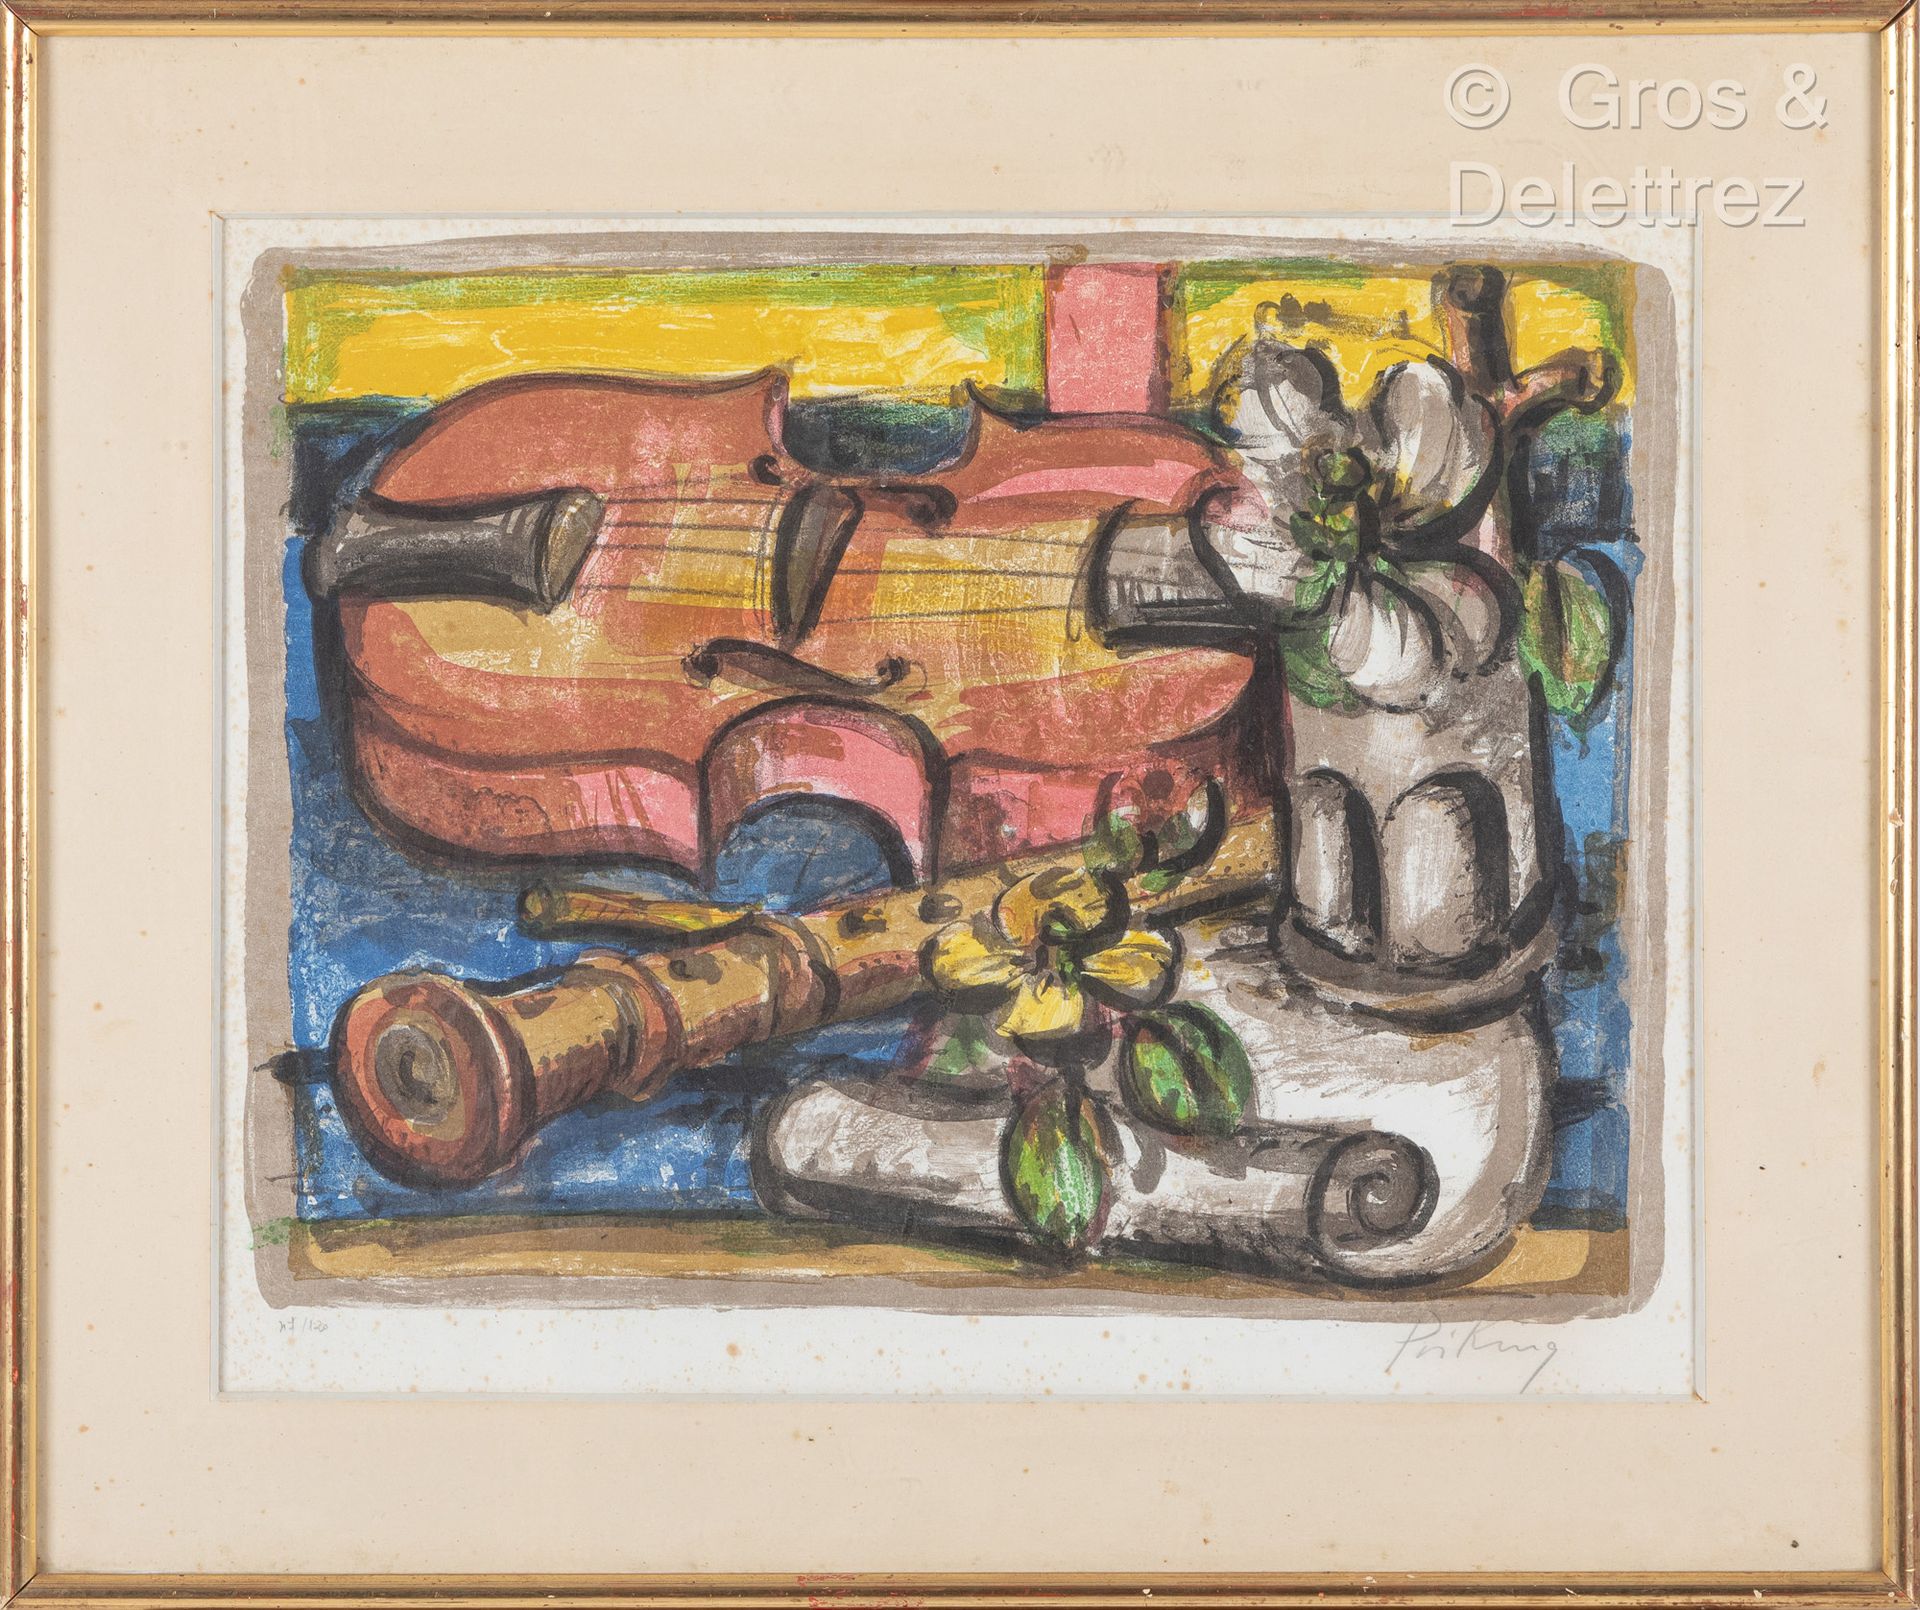 Null 弗朗茨-普里金(1929-1979)

静物与乐器

石版画，已签名并编号为7/120

44 x 55厘米，正在观看